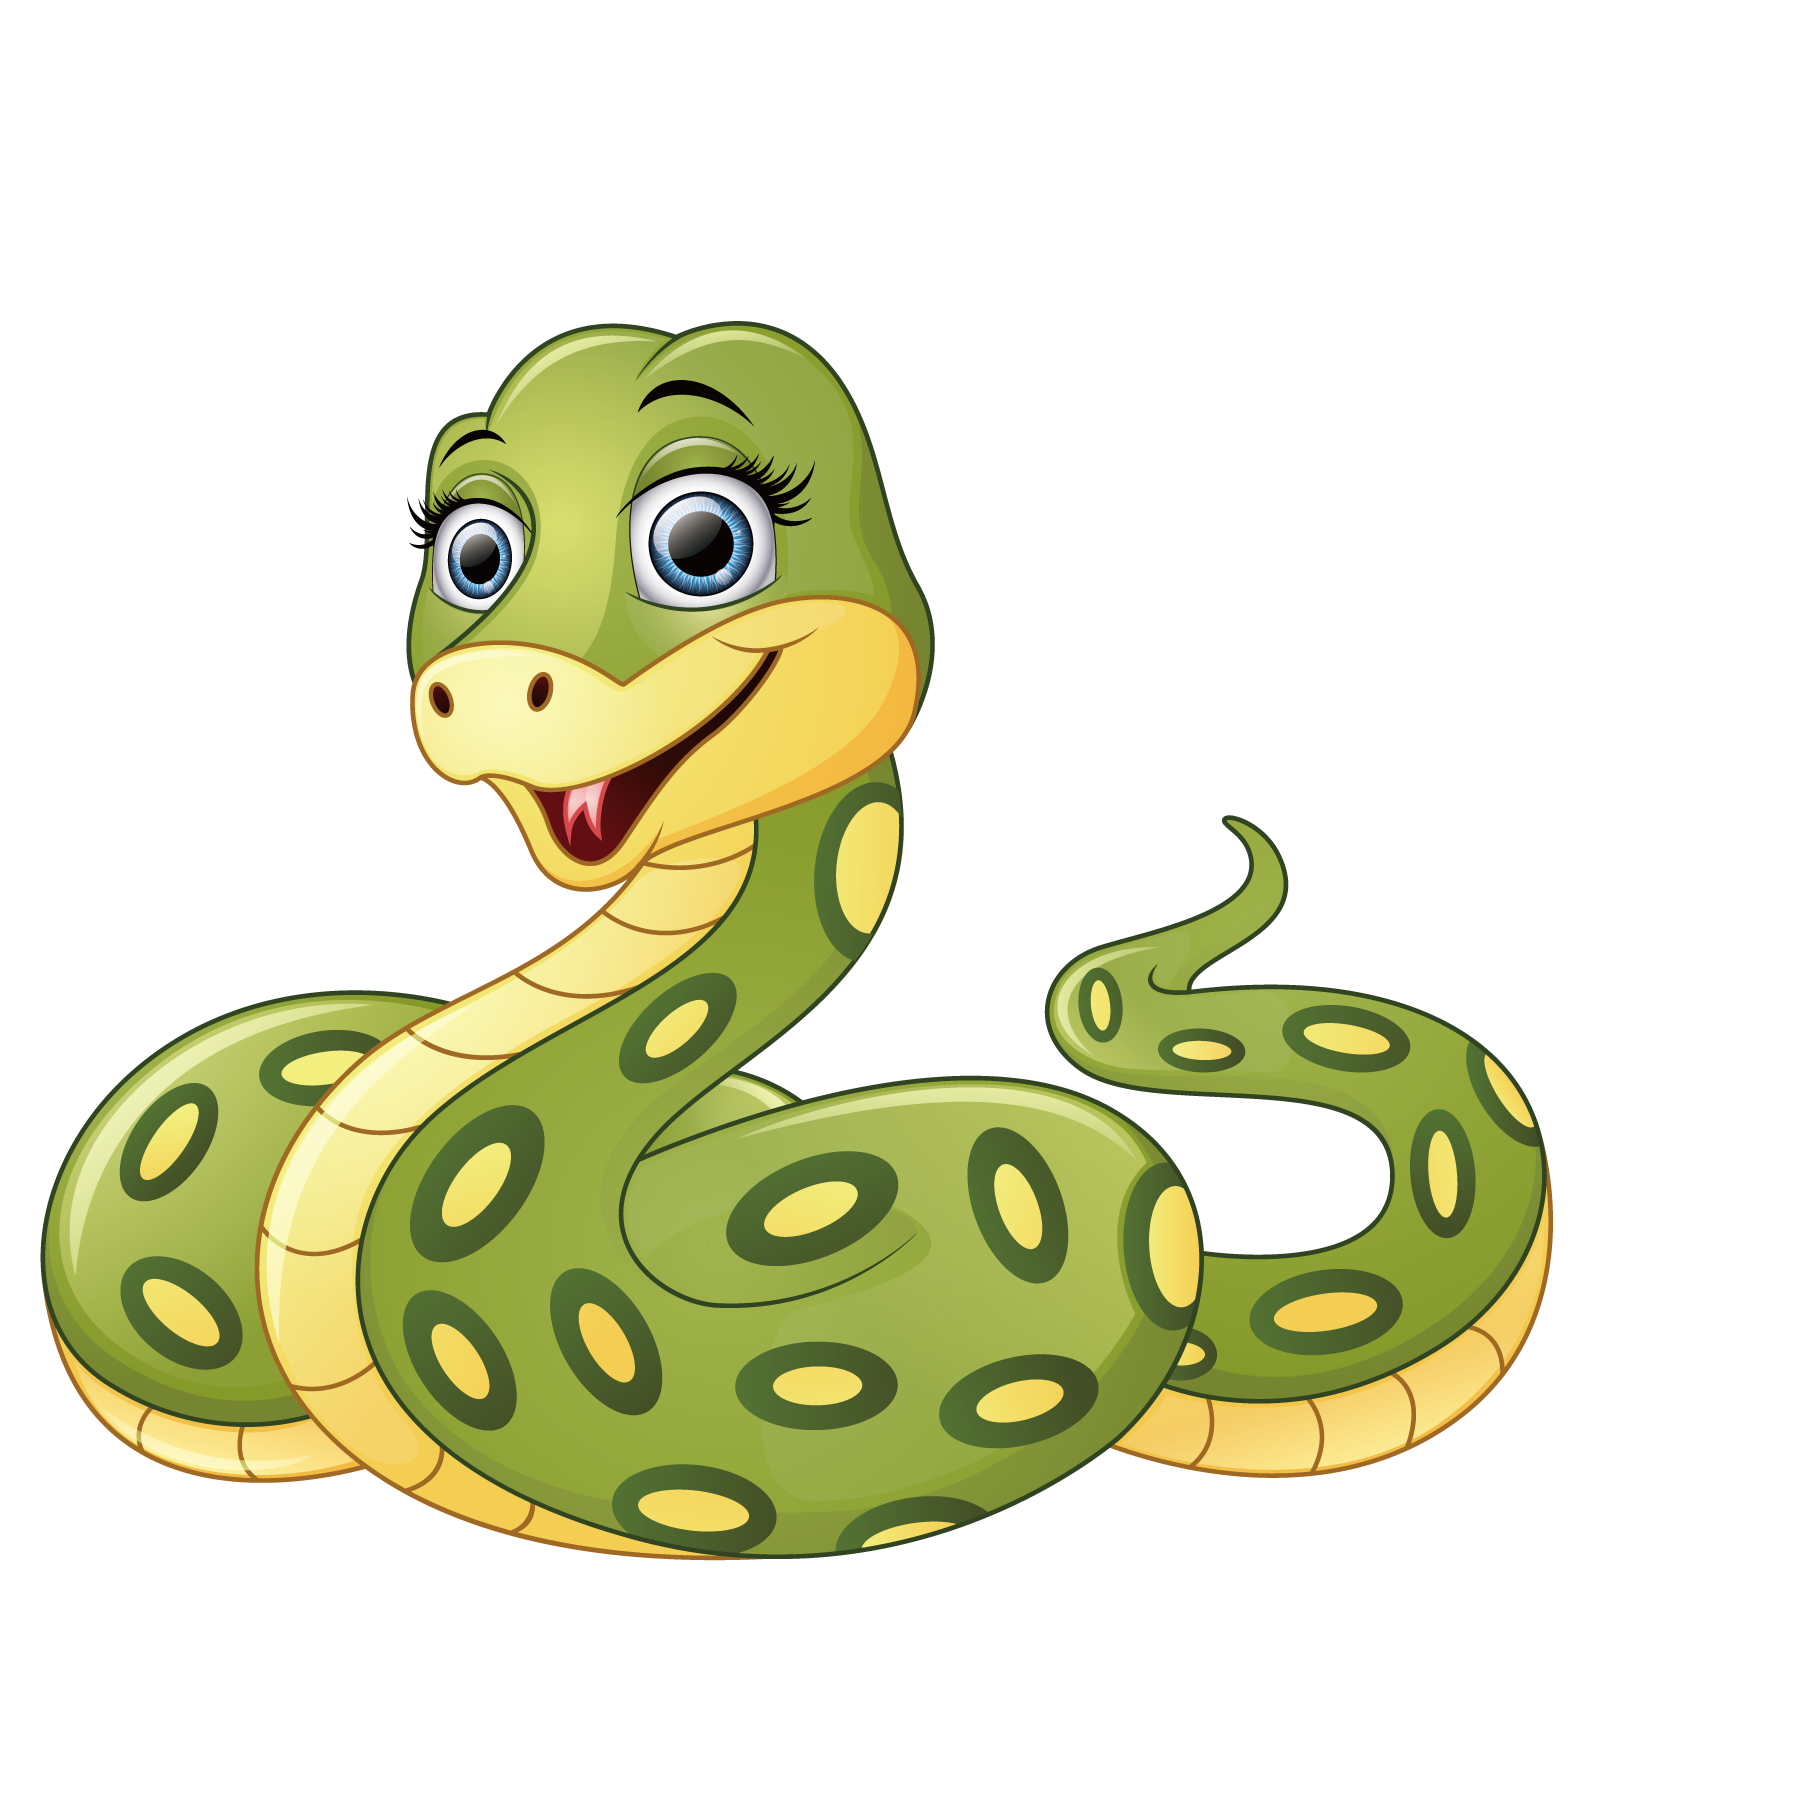 Удав рисунок. Змейка рисунок милый. Рисунок милой змейки. Милая змея рисунок. Green Snake cartoon.